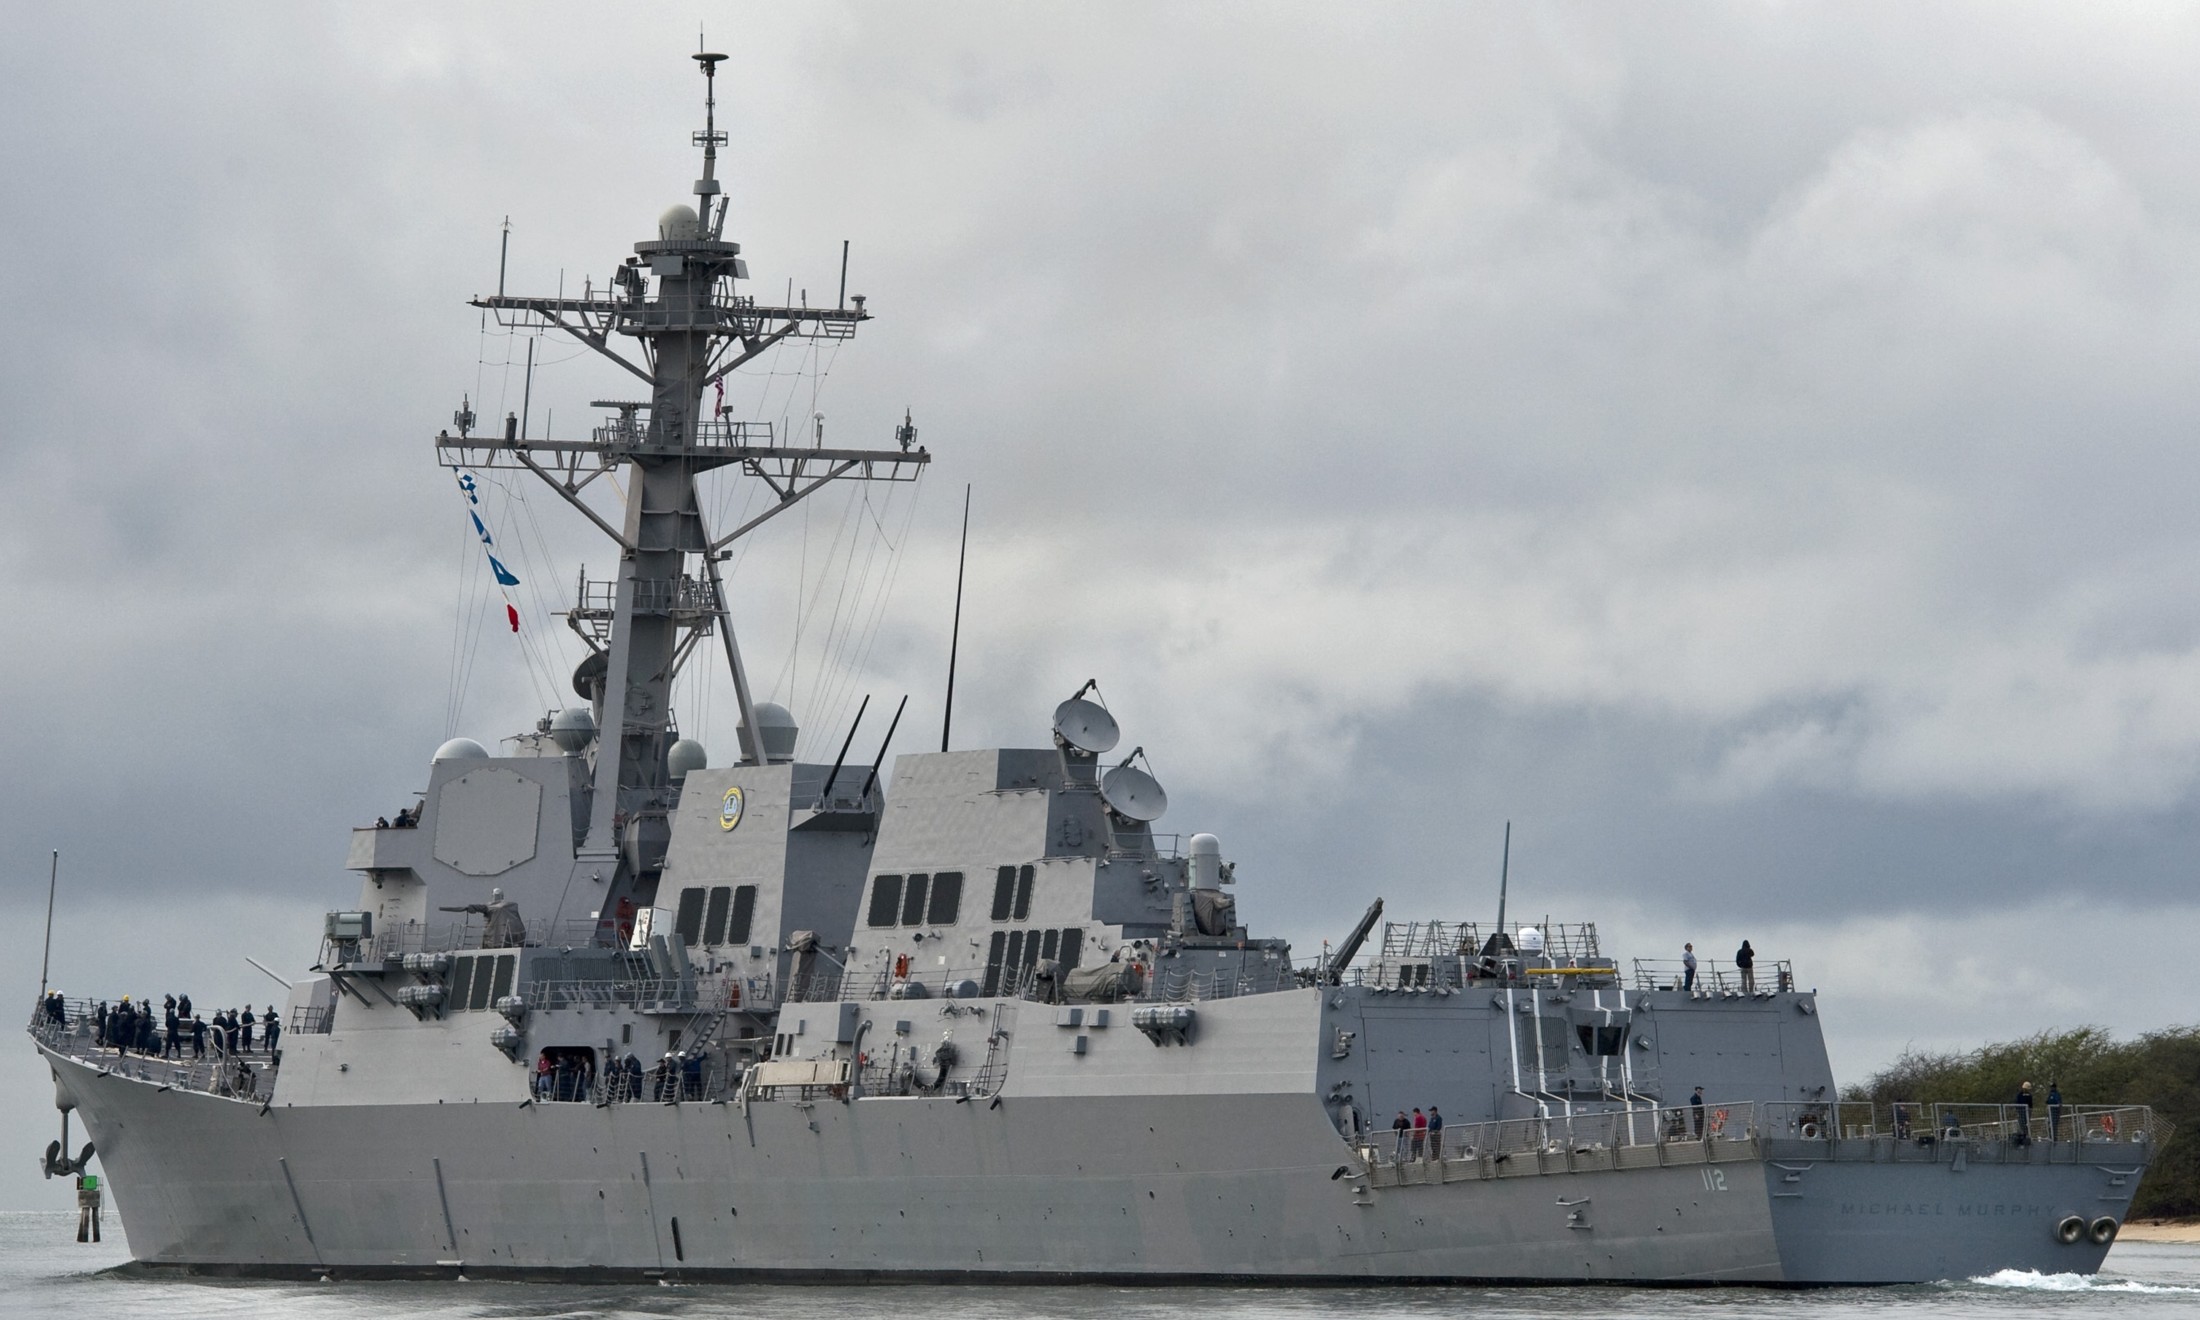 ddg-112 uss michael murphy arleigh burke class guided missile destroyer aegis us navy departing pearl harbor hickam hawaii 14